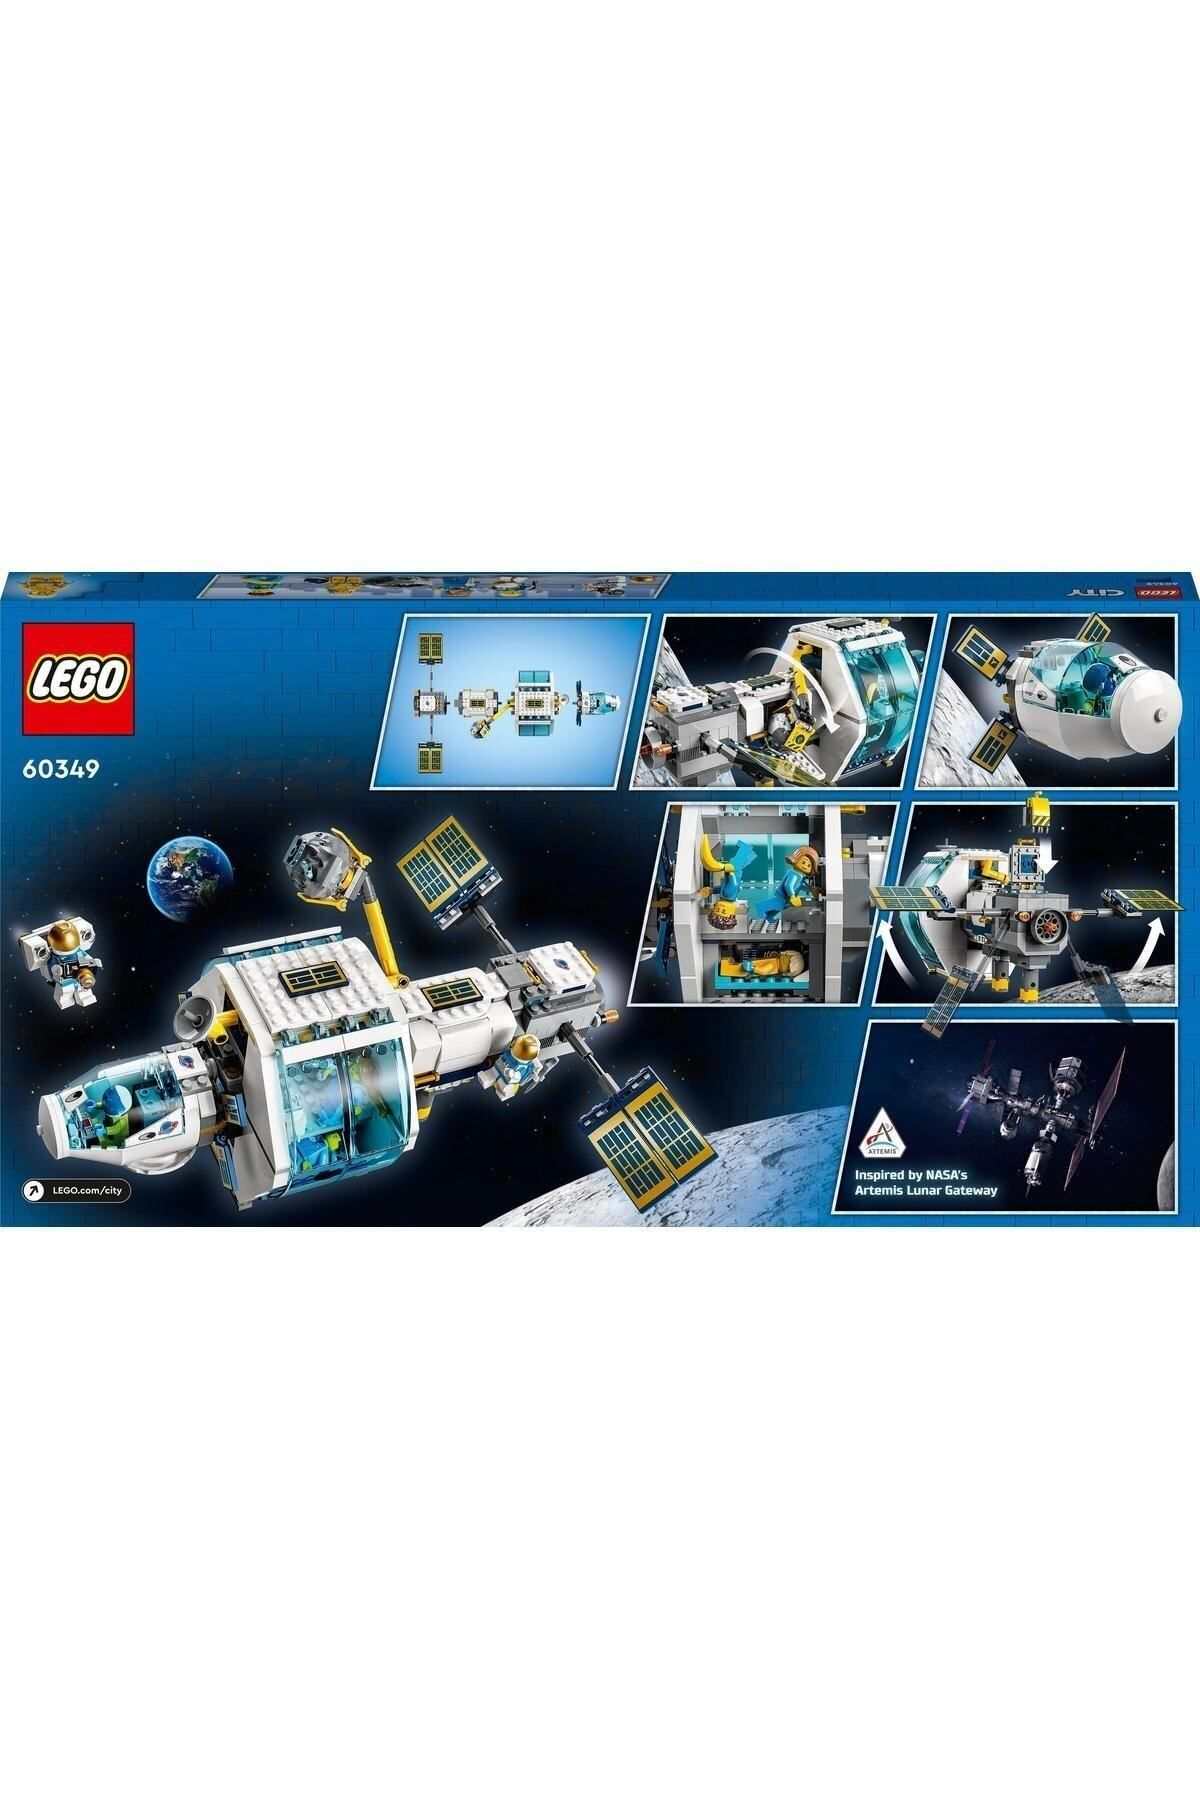 LEGO مجموعه ساخت و ساز اسپیس استیشن شهر ماه 60349 اسباب بازی ساخت و ساز برای کودکان 6 سال و بالاتر (500 قطعه)